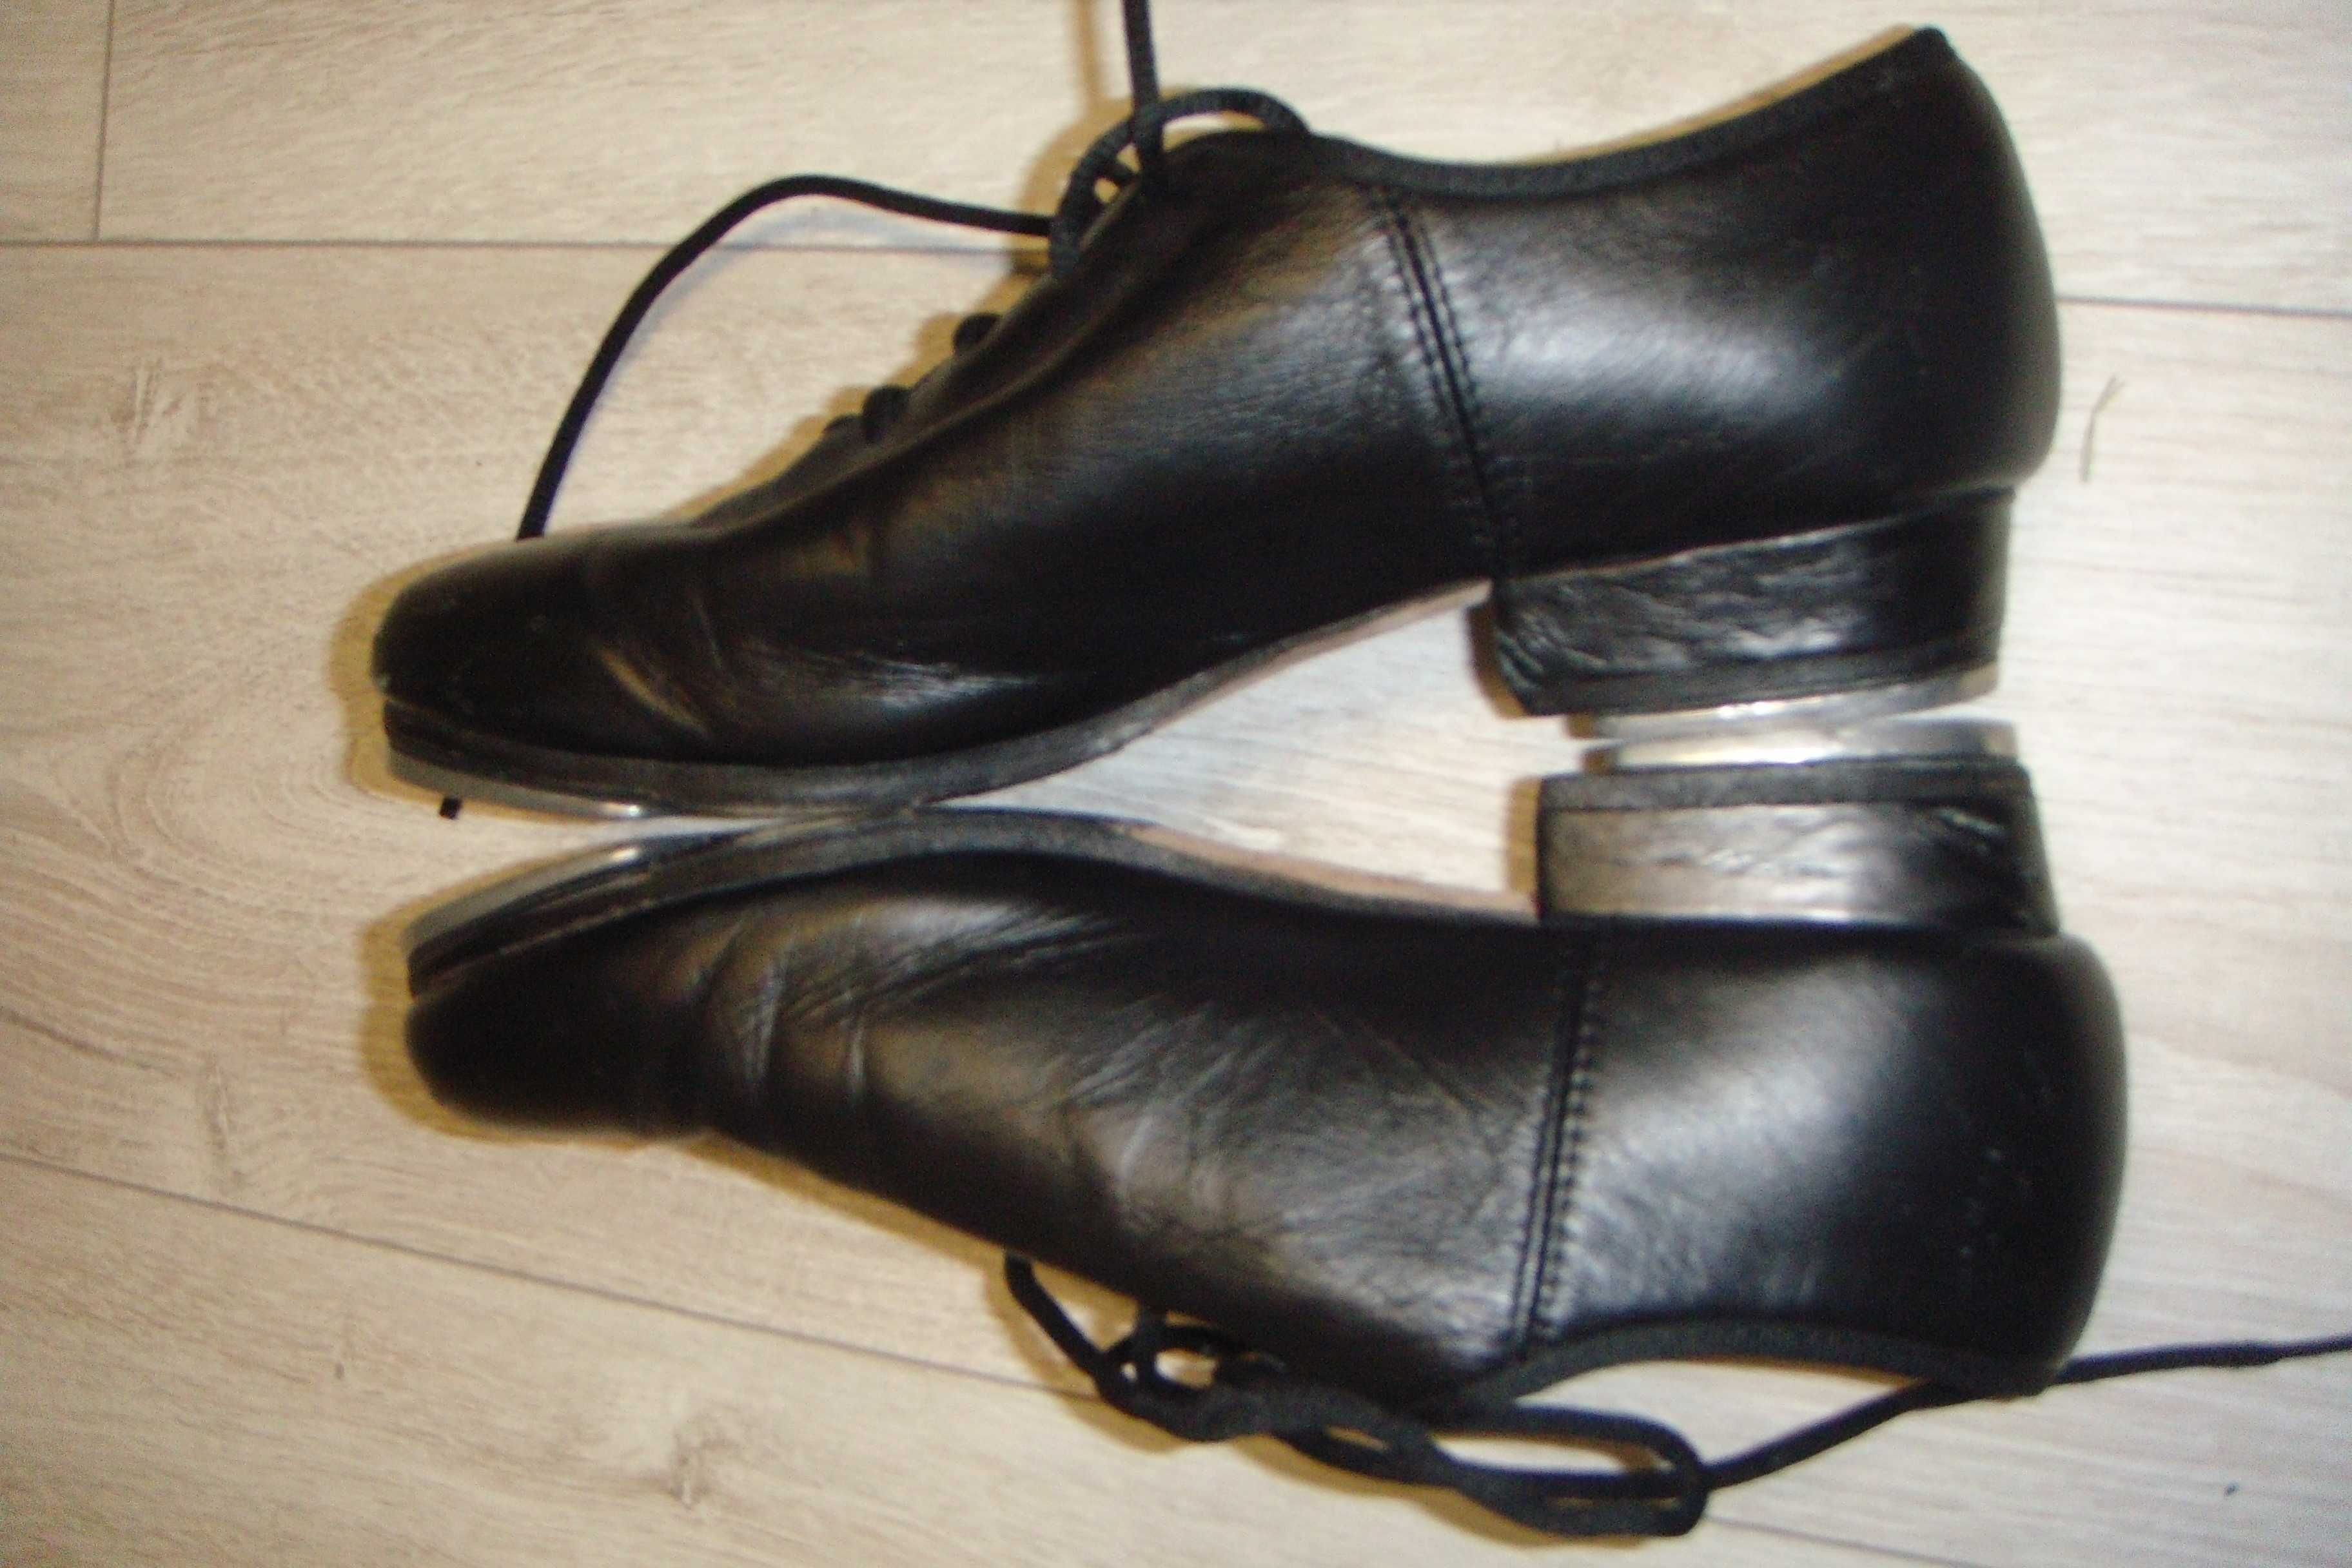 Buty do stepowania stepu czarne 10 Sansha T-mega tańca taneczne 39